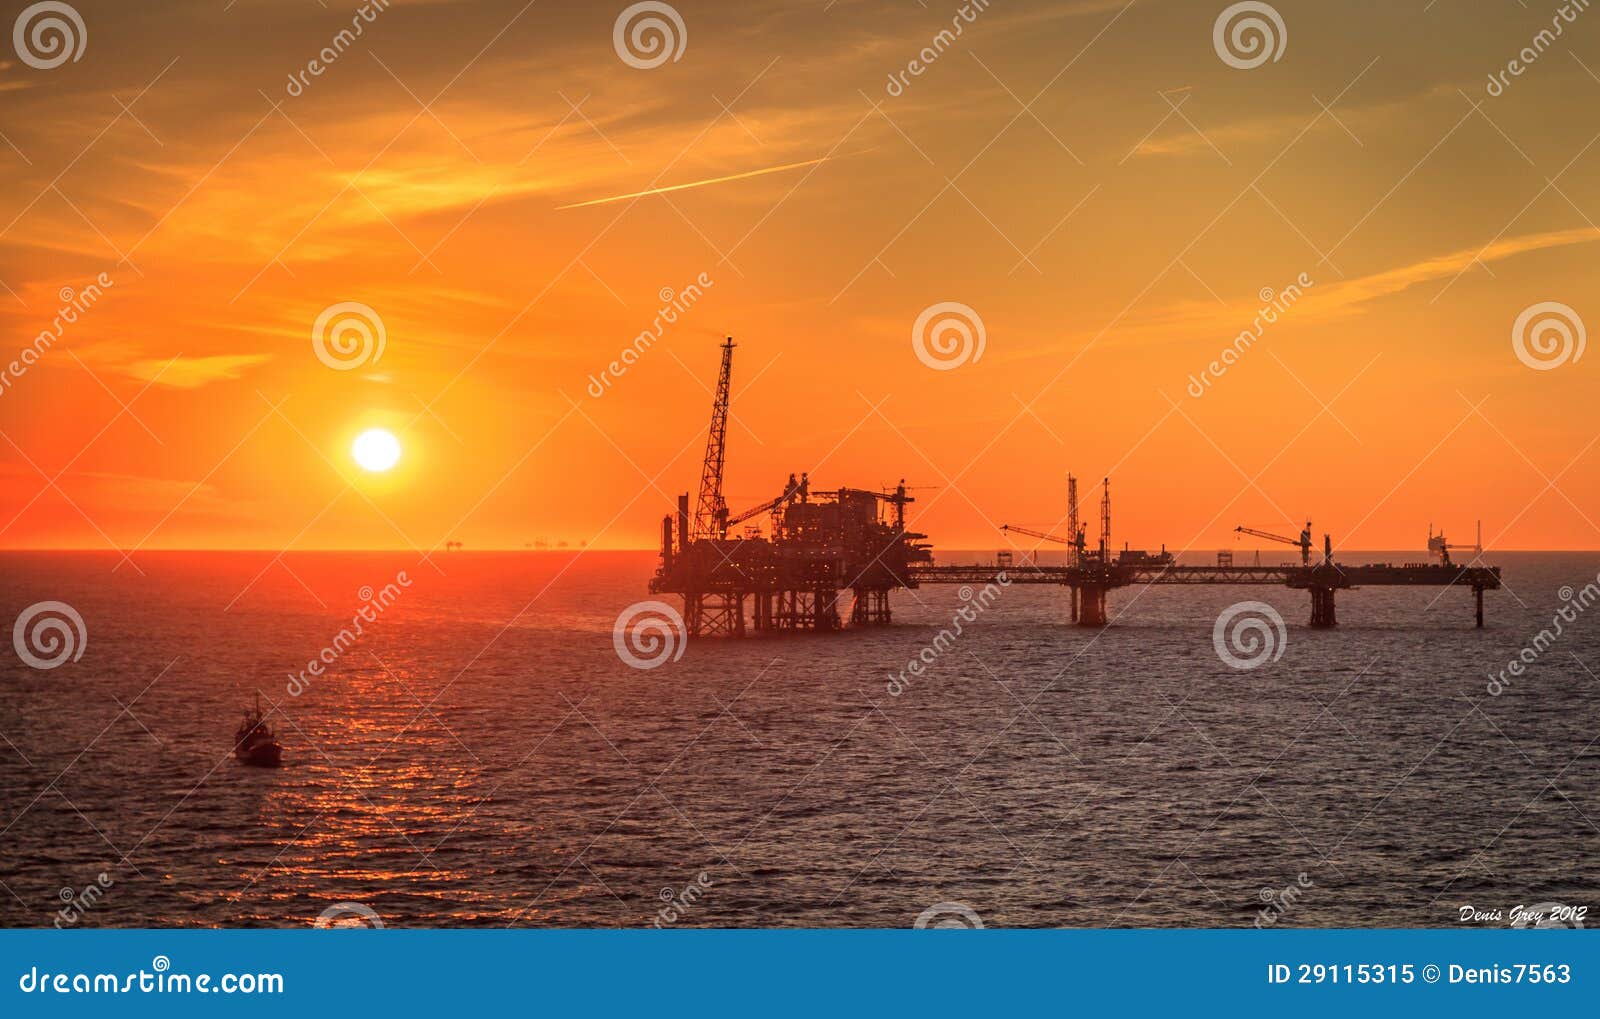 north sea oil and gas platform